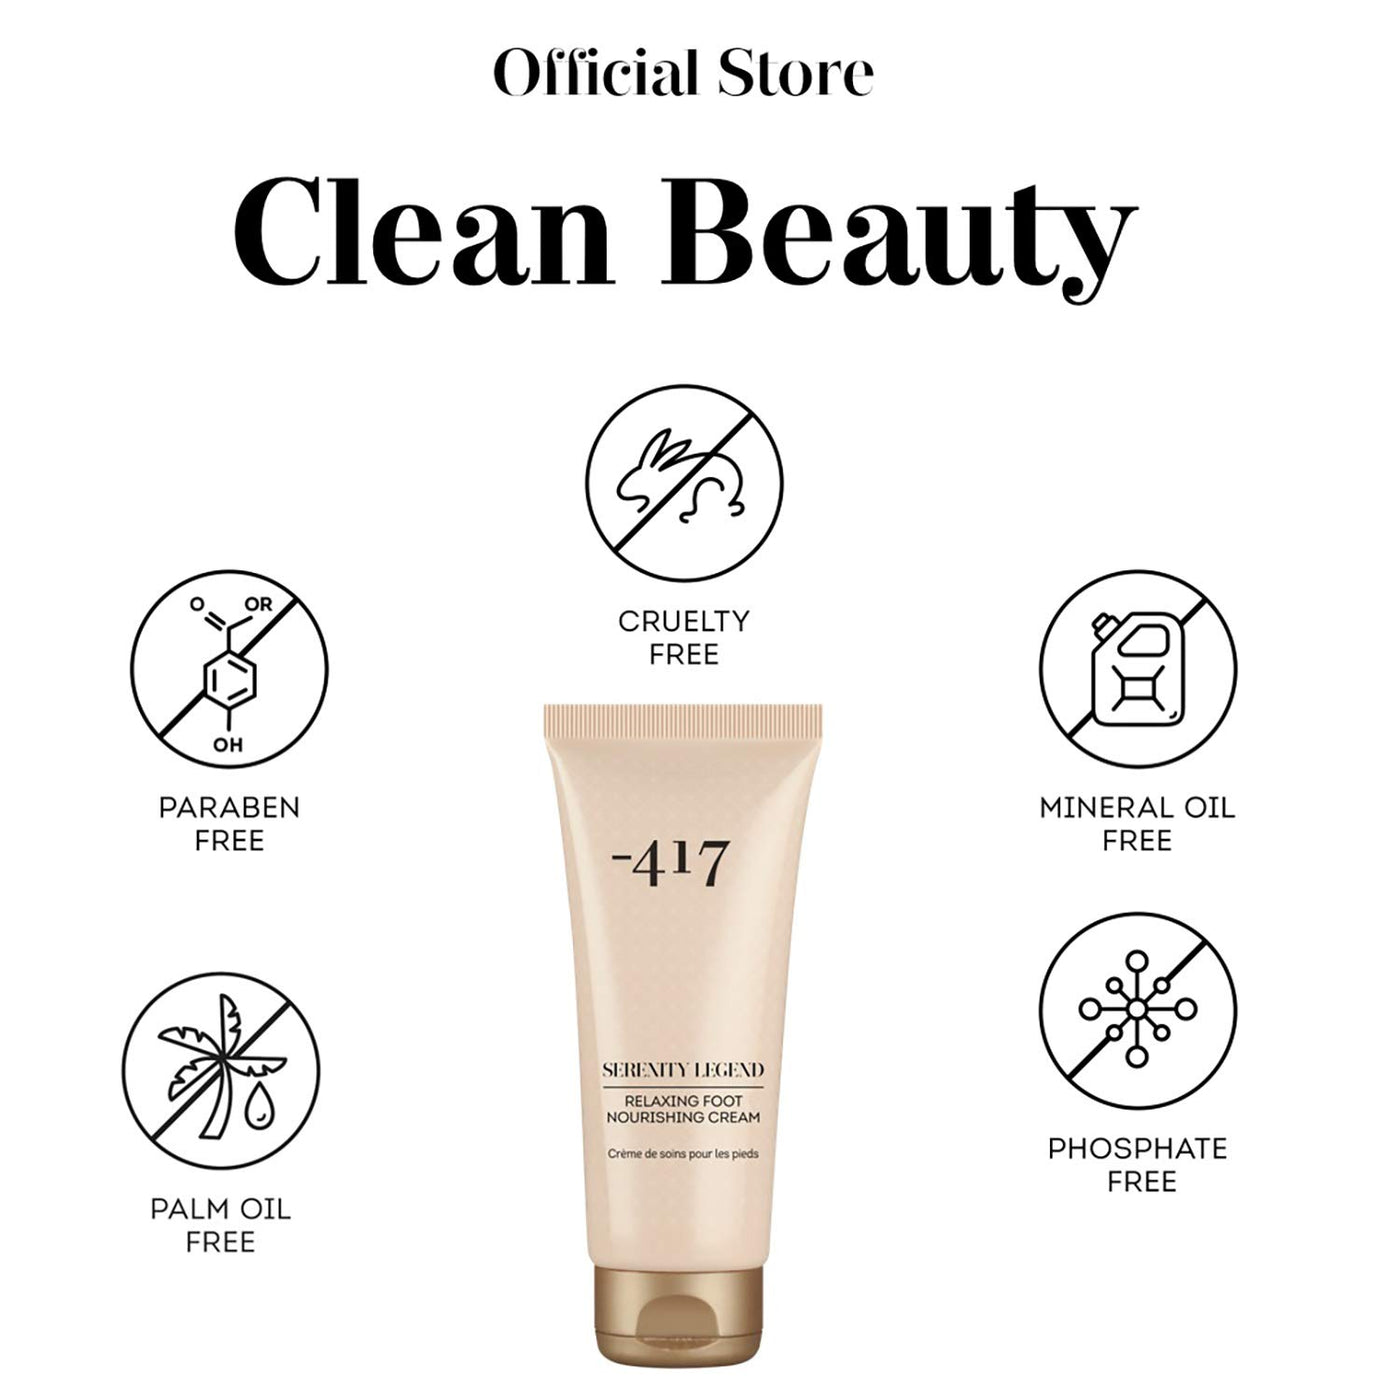 -417 Dead Sea Cosmetics Nourishing Foot Cream - Softening Foot Cream with Shea Butter & Non Greasy